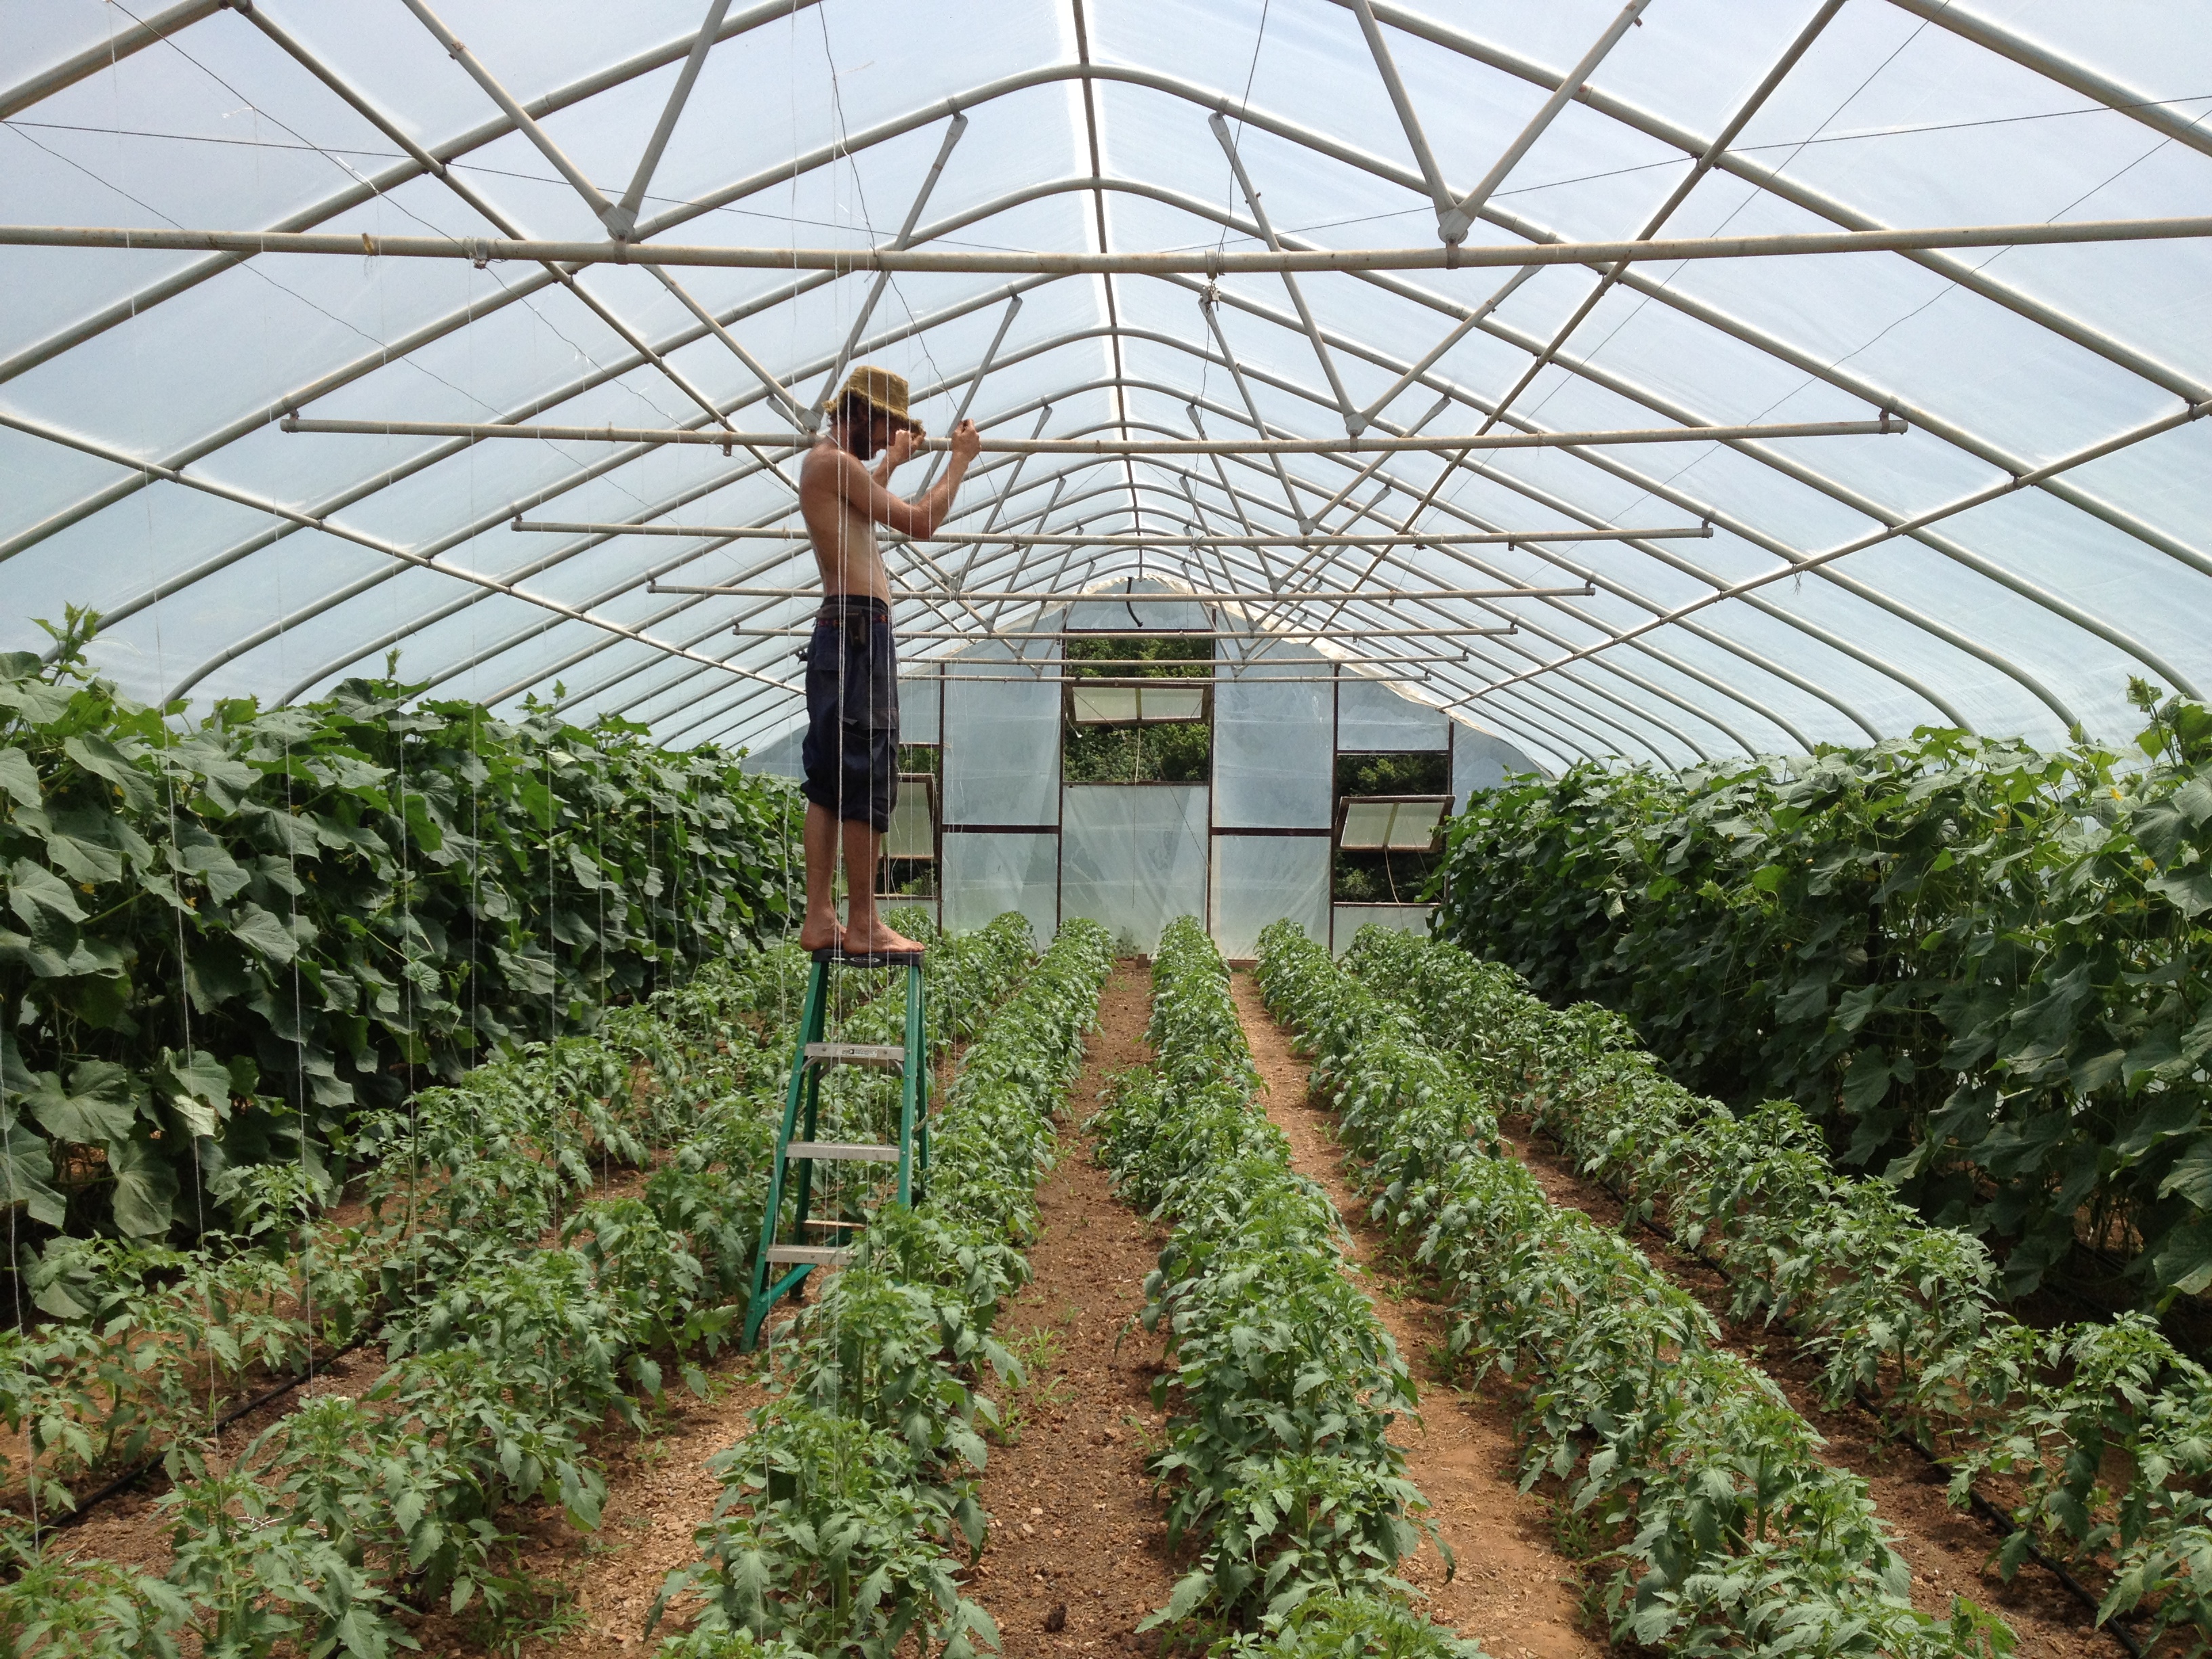 Updates on Pocket Farm Classes, Working Model Farm | SustainFloyd